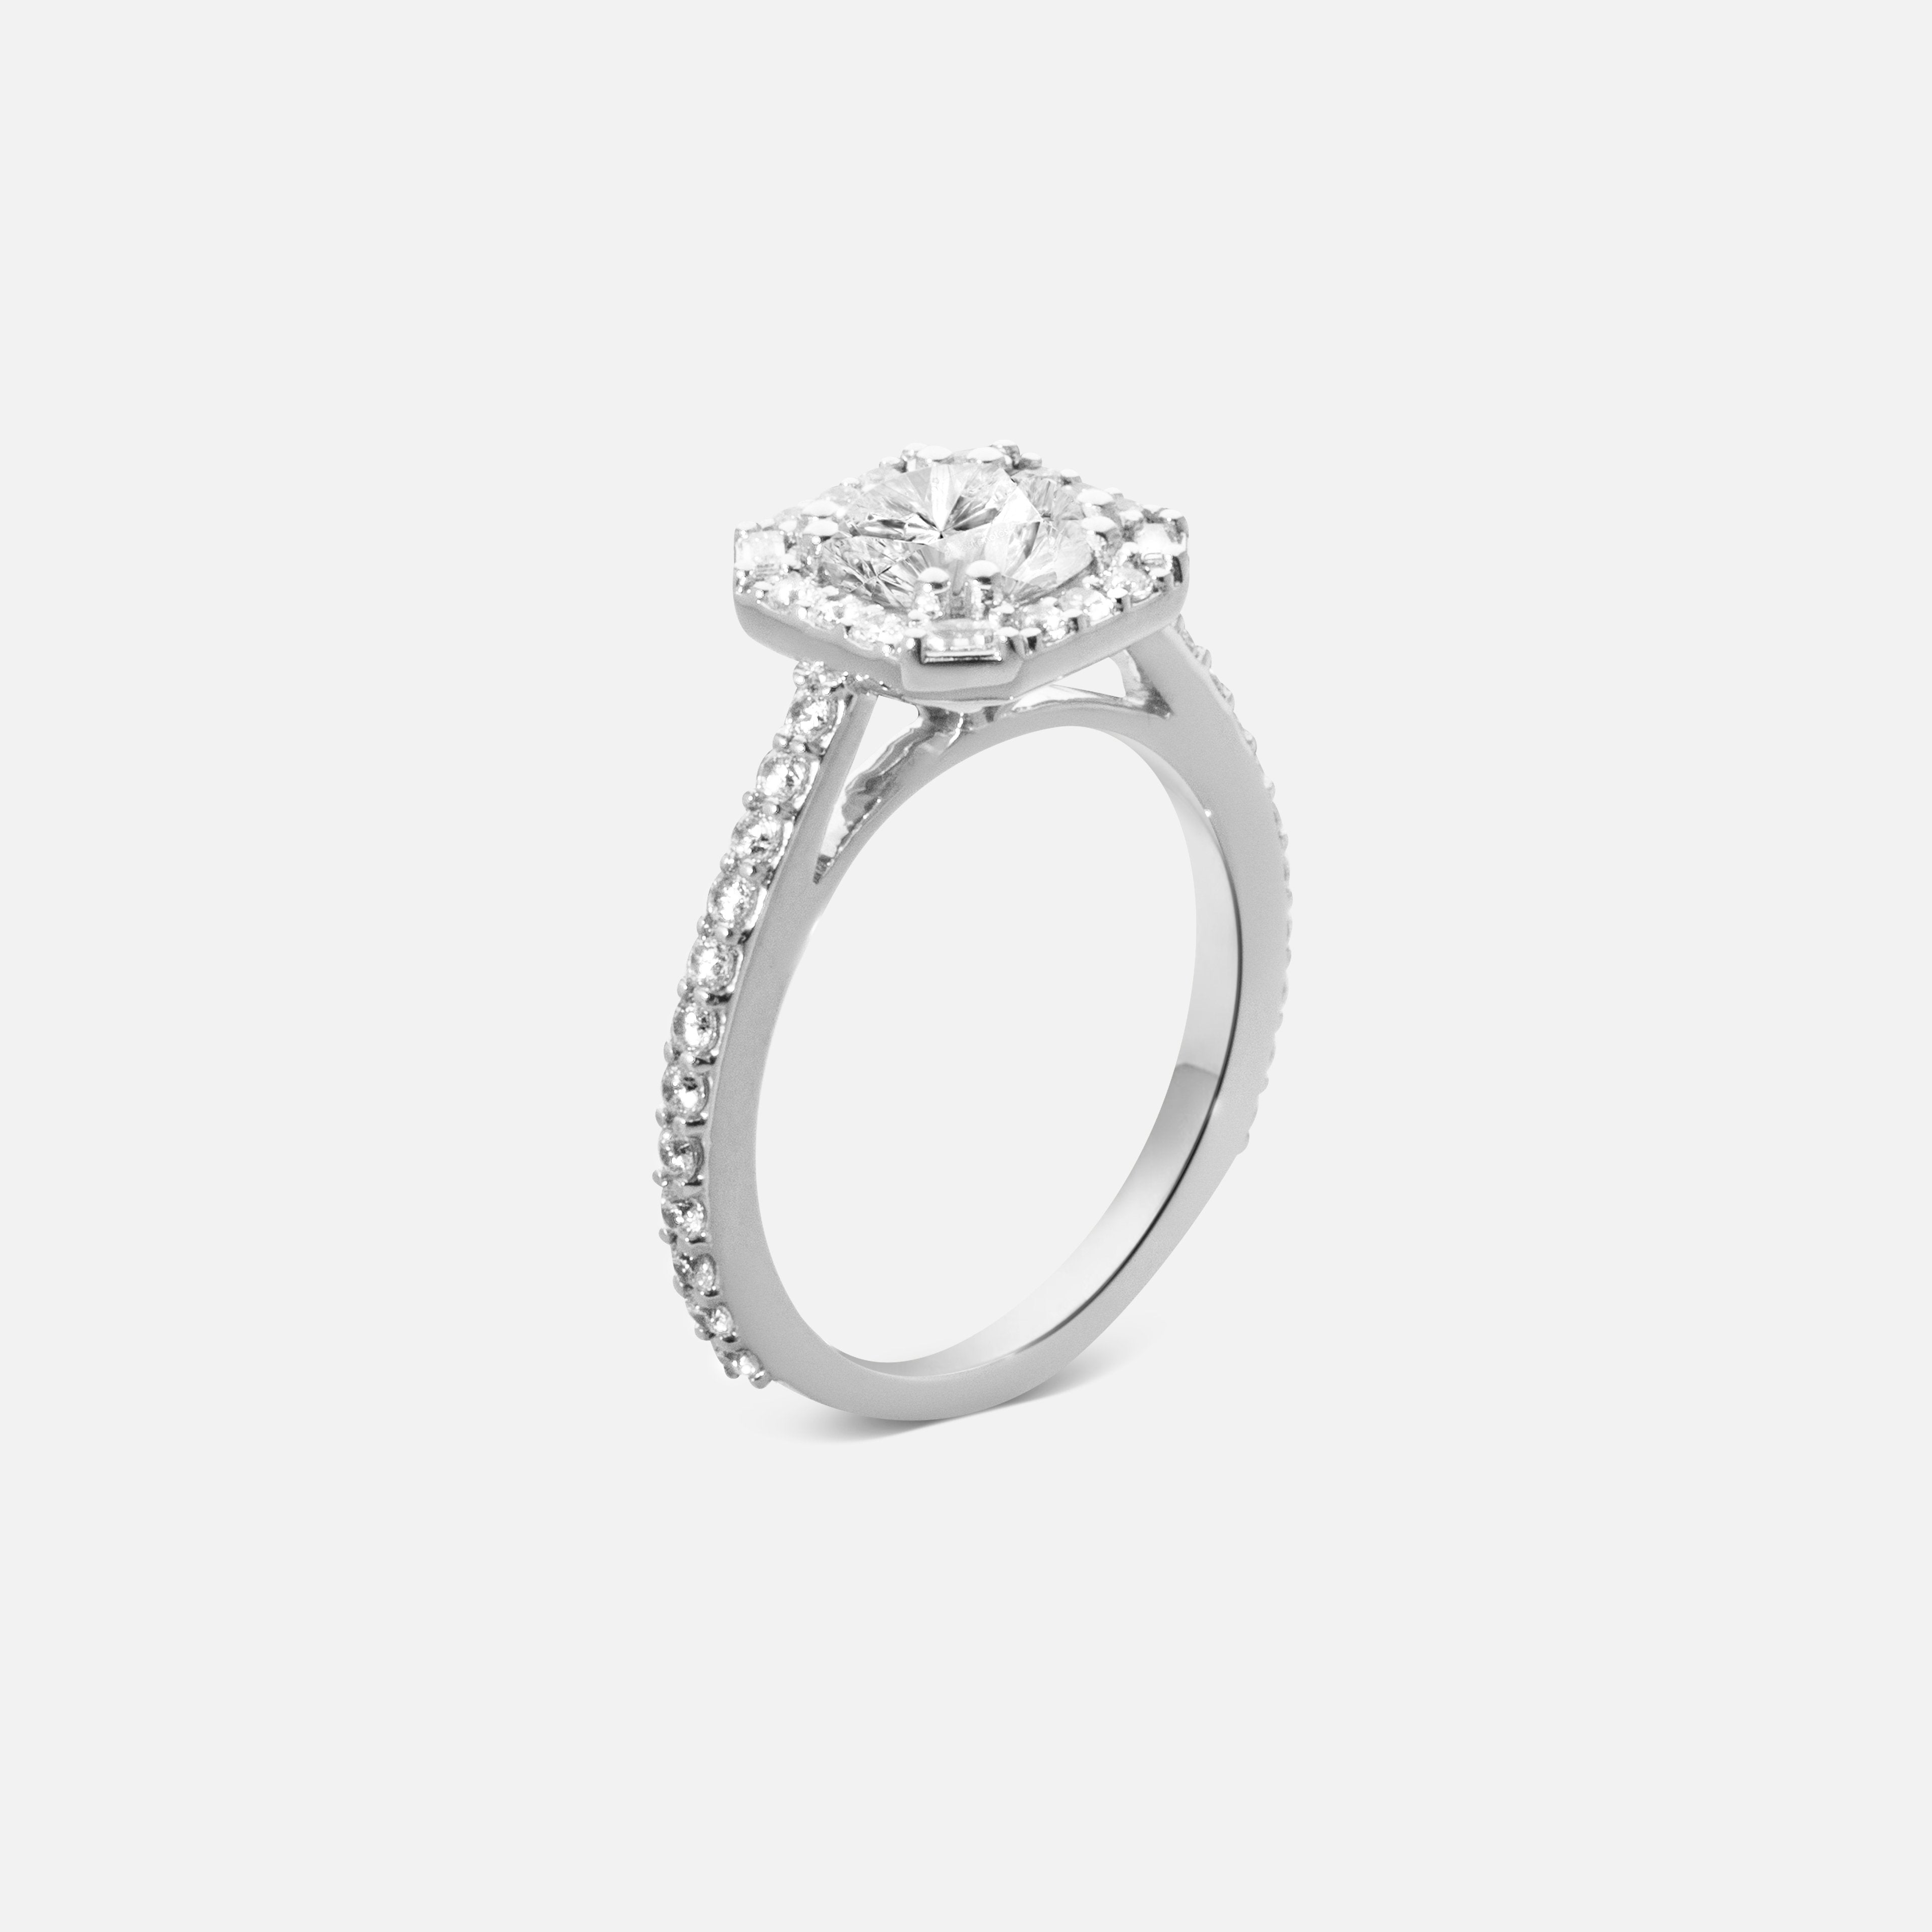 1,2ct Vintage Inspired Halo Diamond Ring